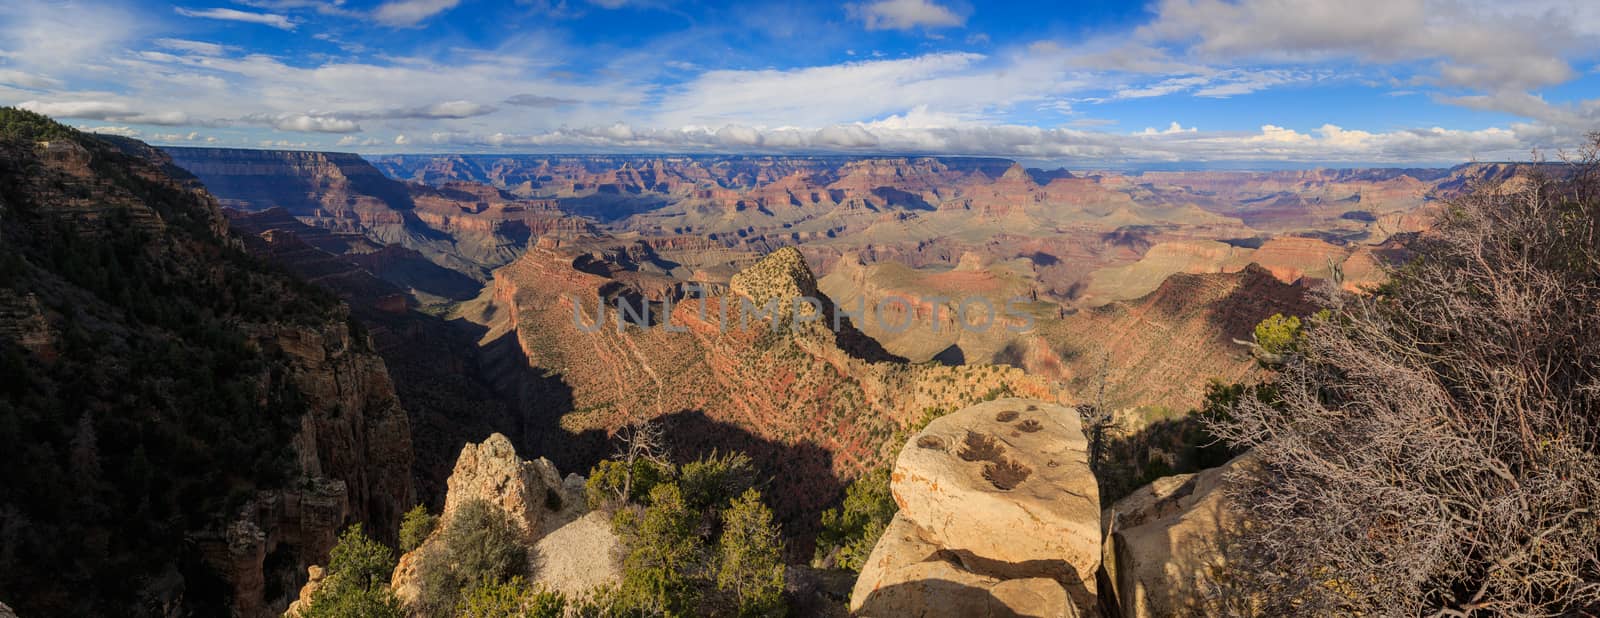 Beautiful Landscape of Grand Canyon, South Rim, Arizona, United  by dpetrakov